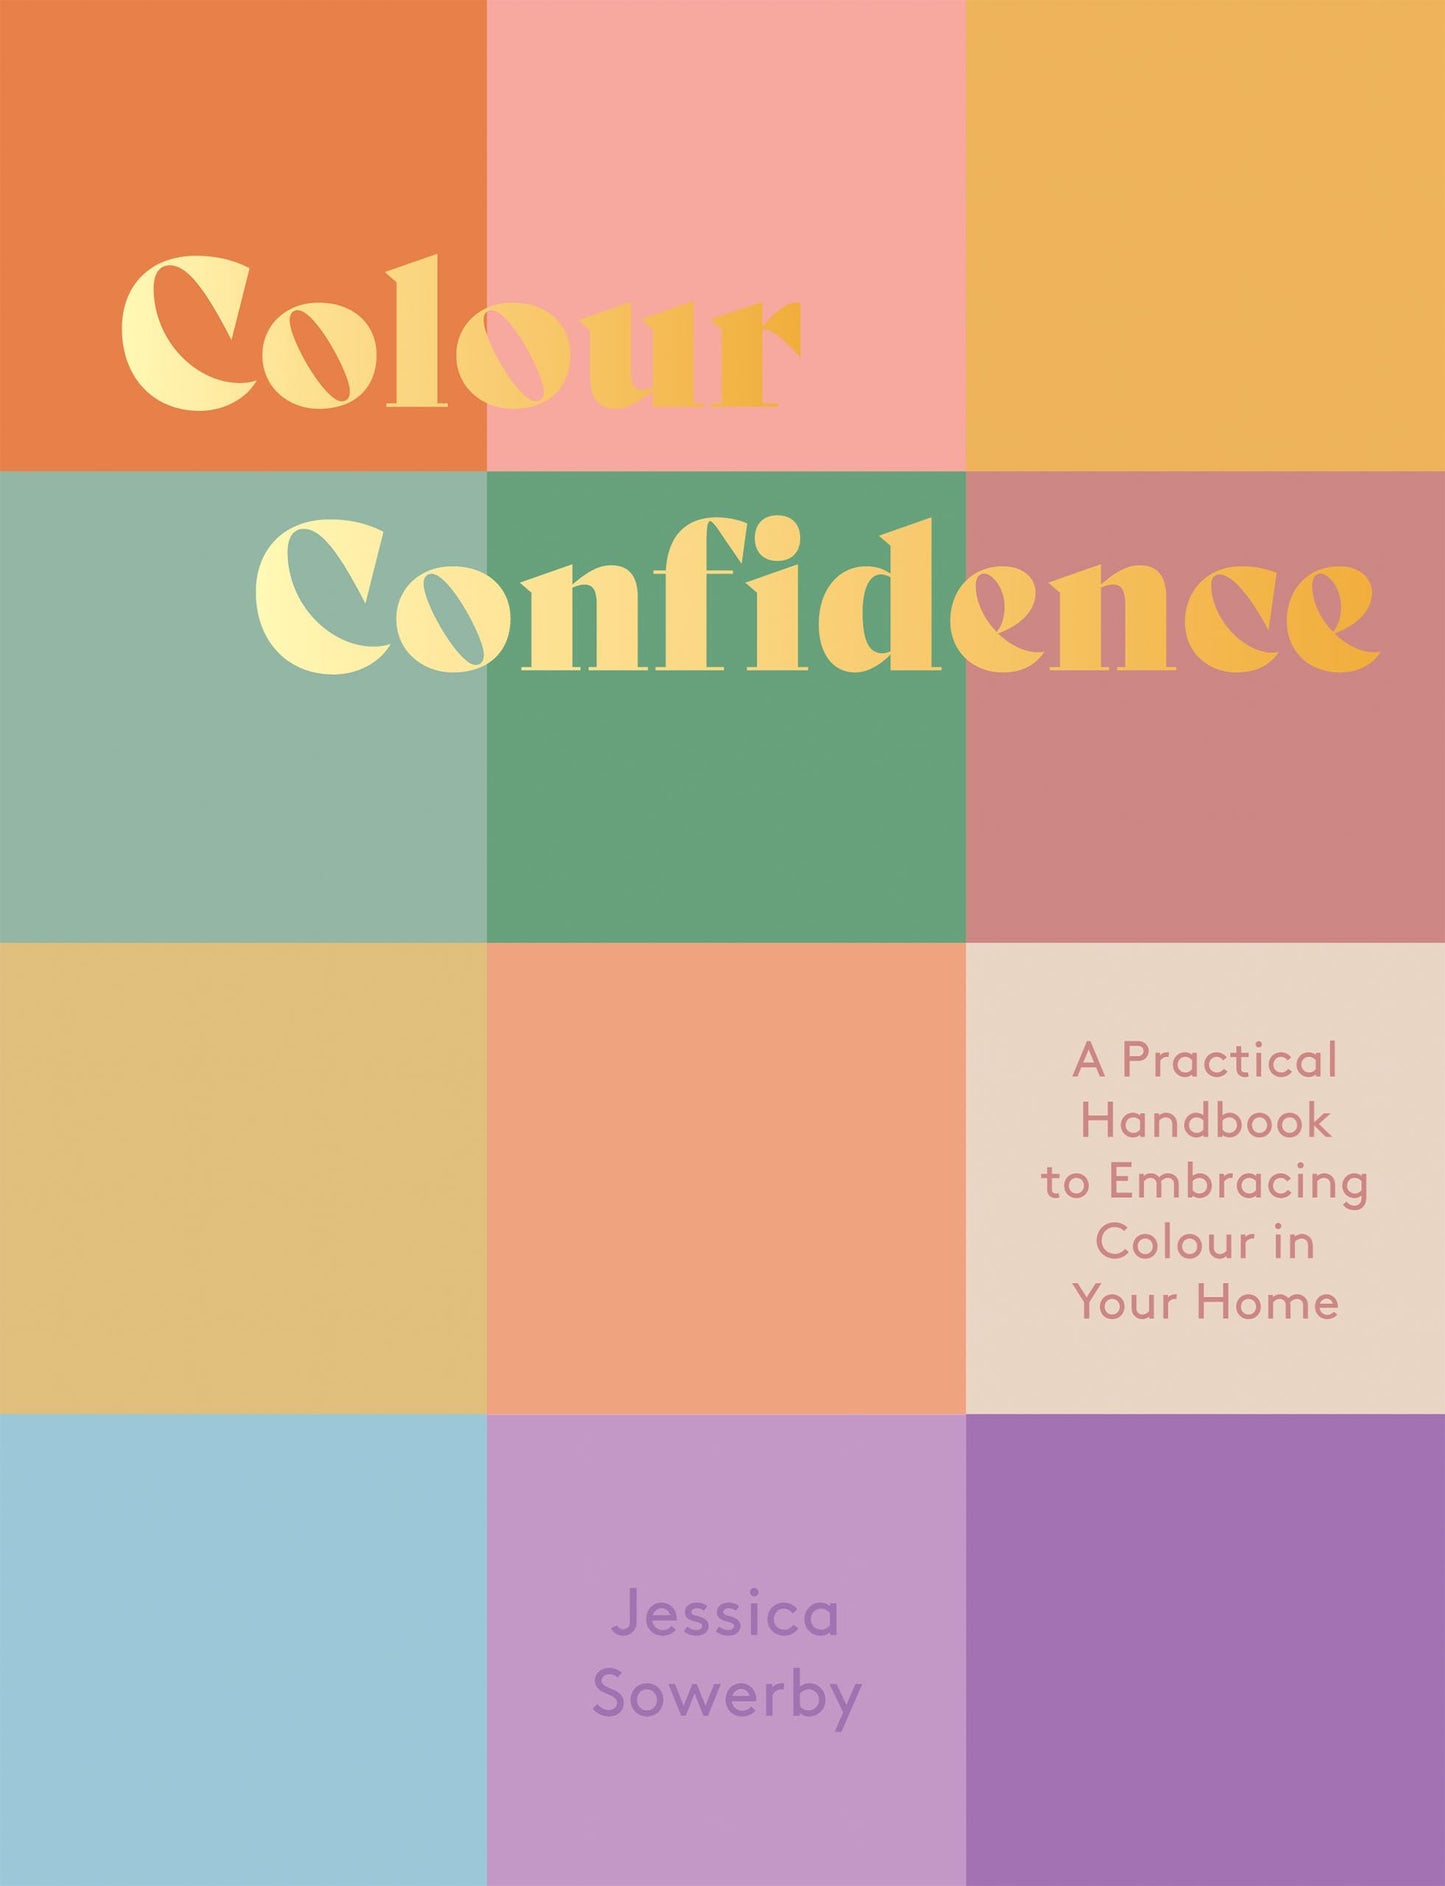 Colour Confidence